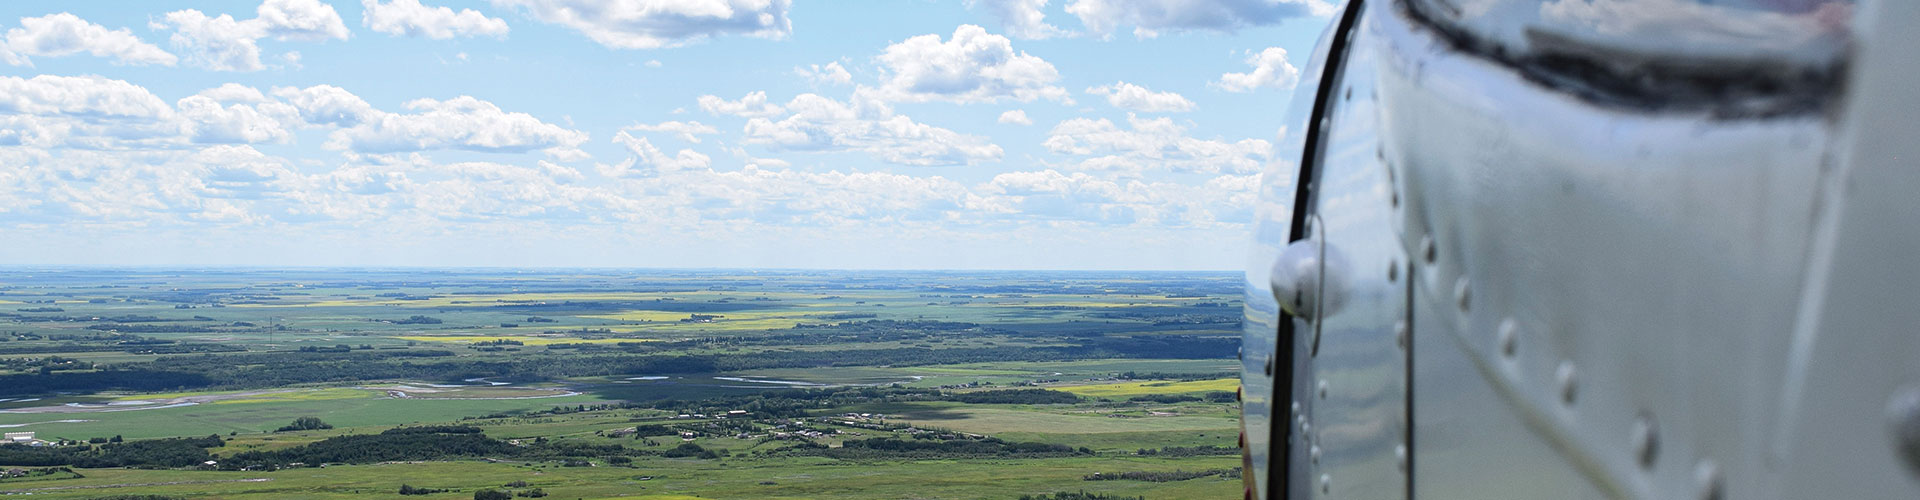 Taking flight above the landscape of western Manitoba with Brandon Flight Centre, Brandon, Manitoba